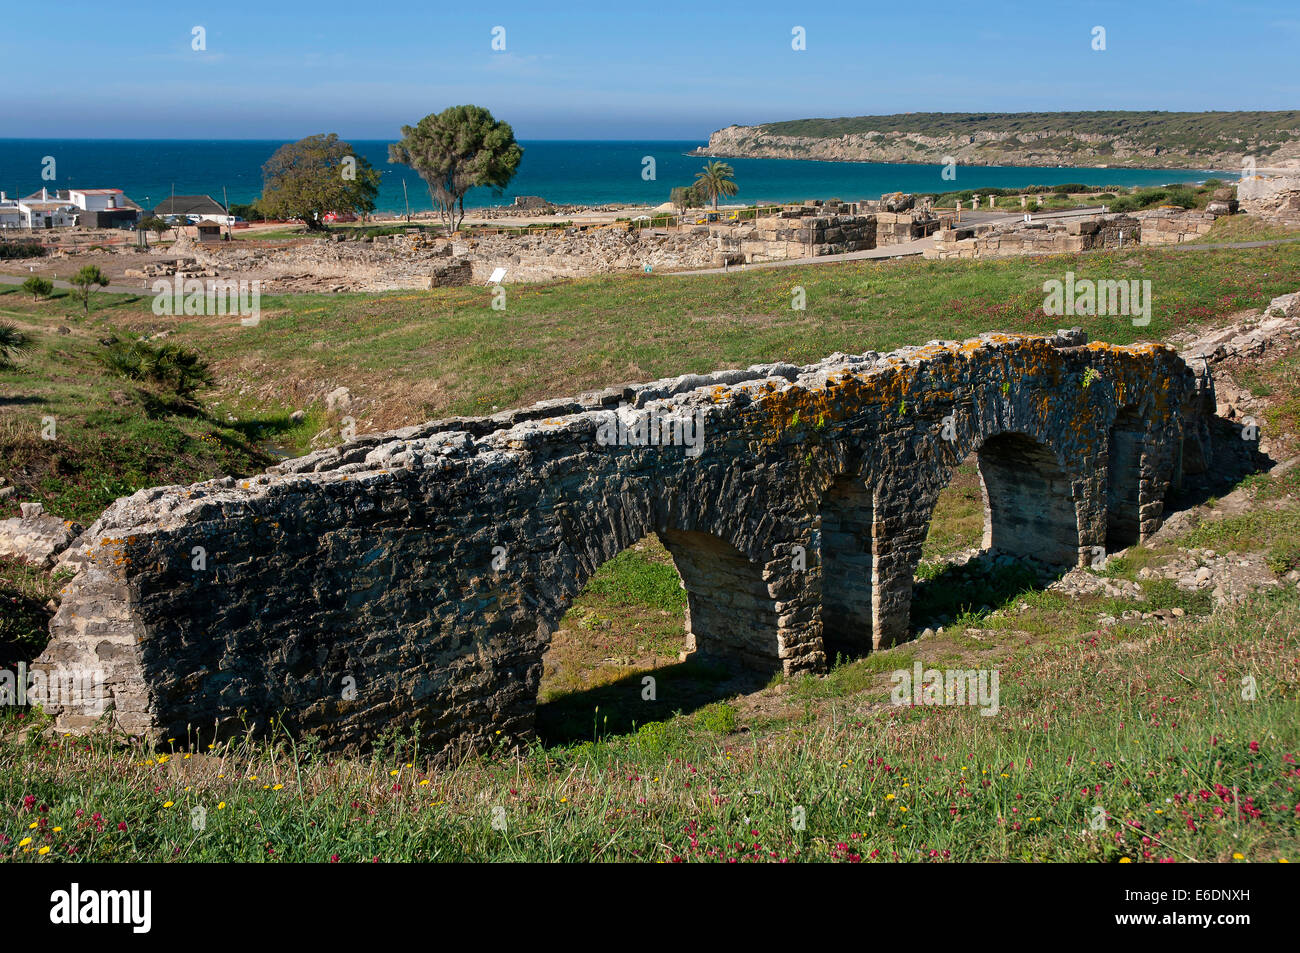 Ruines romaines de Baelo Claudia-aqueduc de Punta Paloma, Tarifa, province de Cadix, Andalousie, Espagne, Europe Banque D'Images